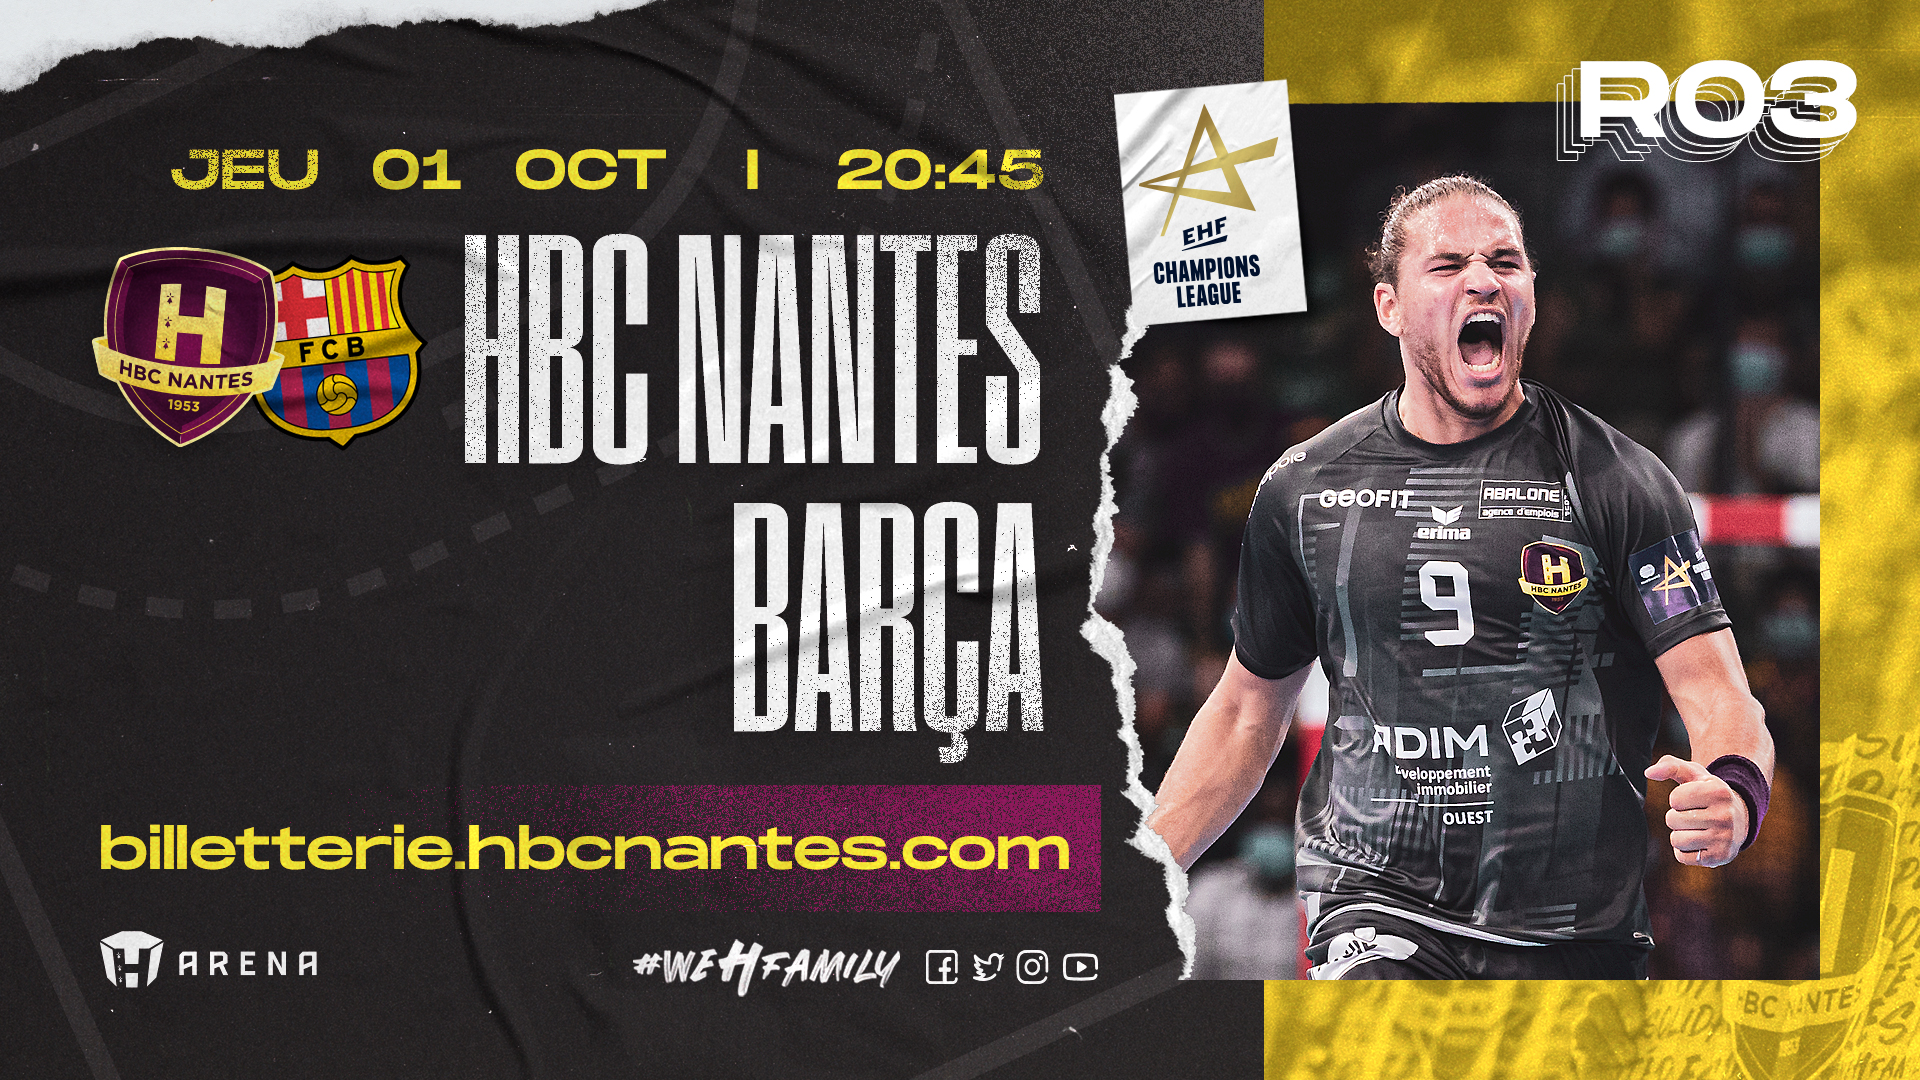 HBC Nantes - Barça, le Match of the Week